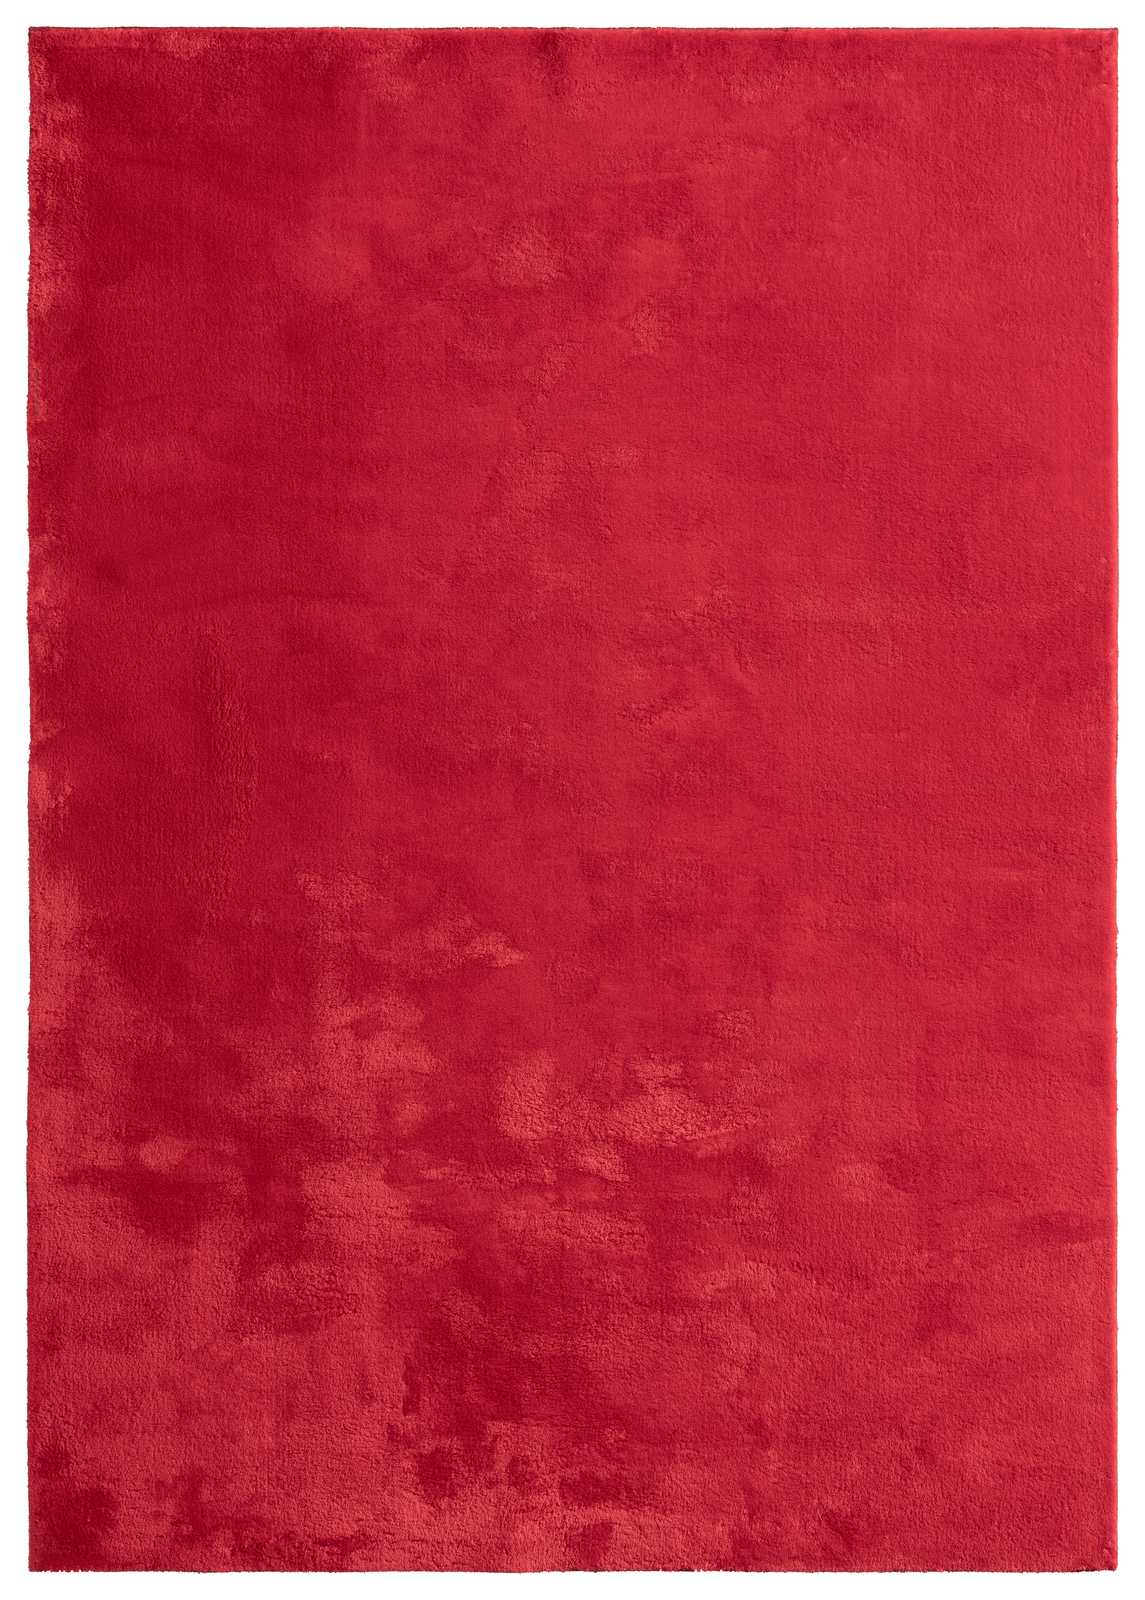             Tappeto a pelo alto extra morbido di colore rosso - 110 x 60 cm
        